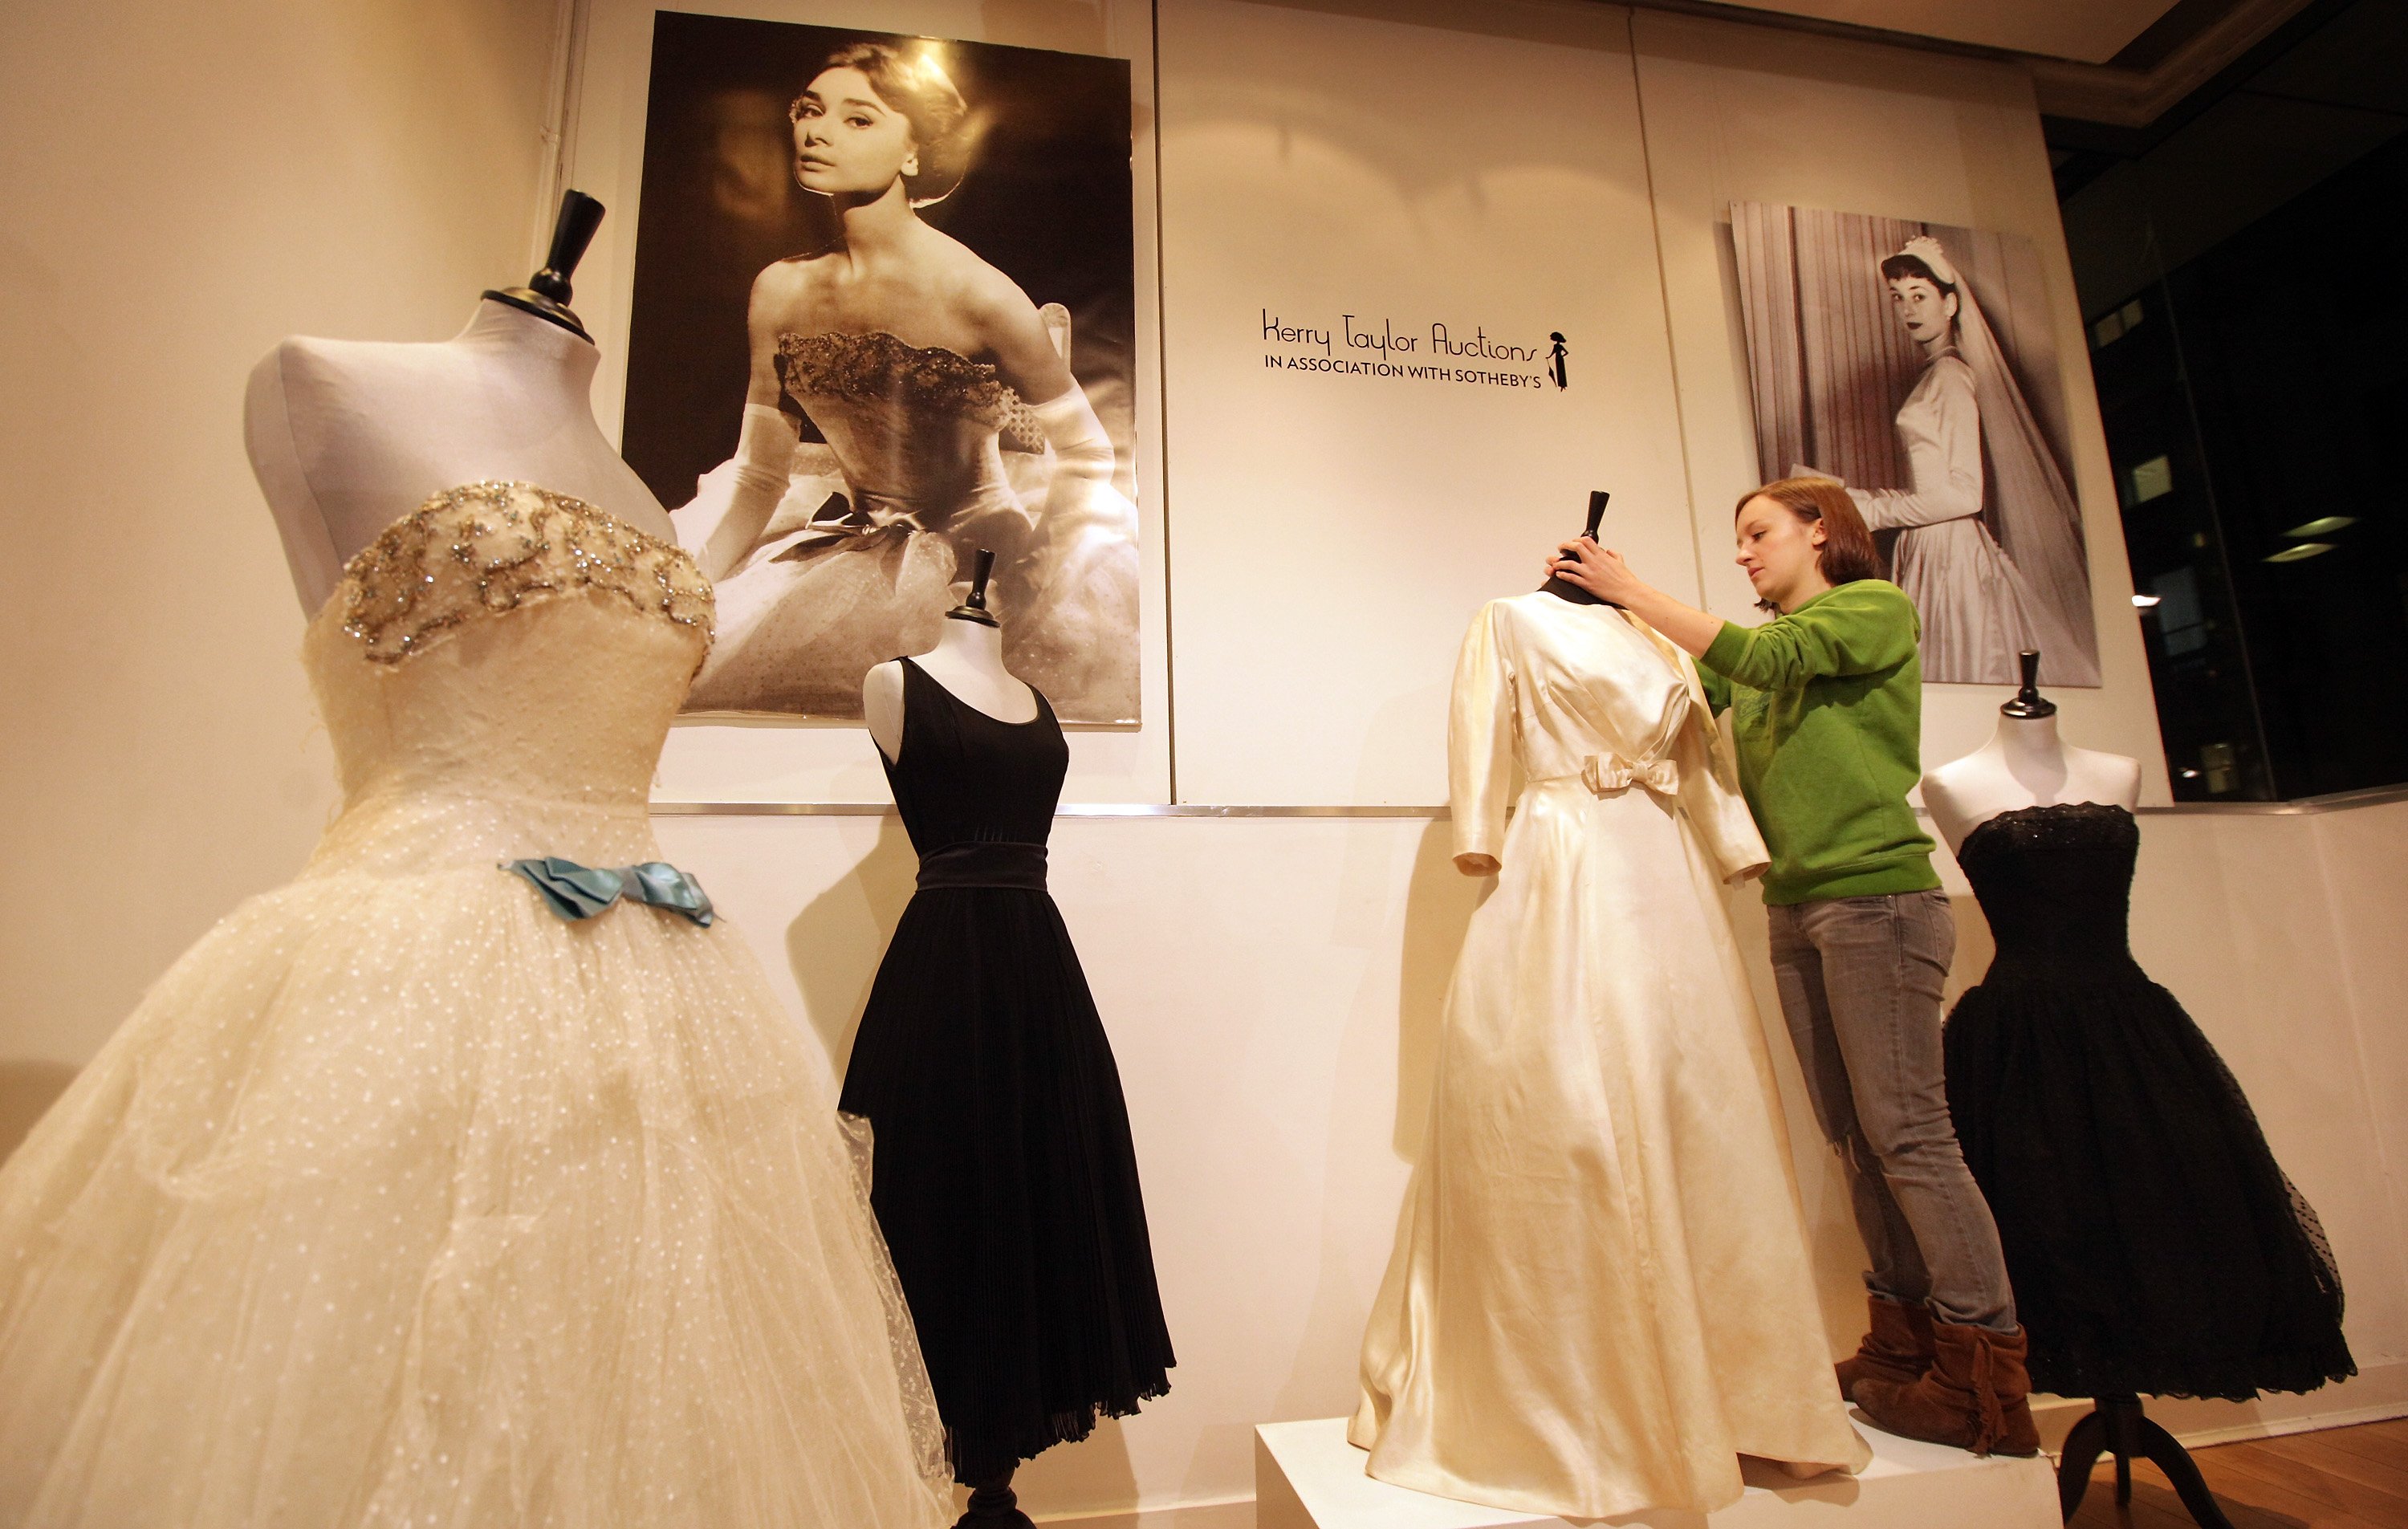 Un miembro del personal de The Kerry Taylor Auctions ajusta el vestido nupcial de Audrey Hepburn el 4 de diciembre de 2009 en Londres. | Foto: Getty Images